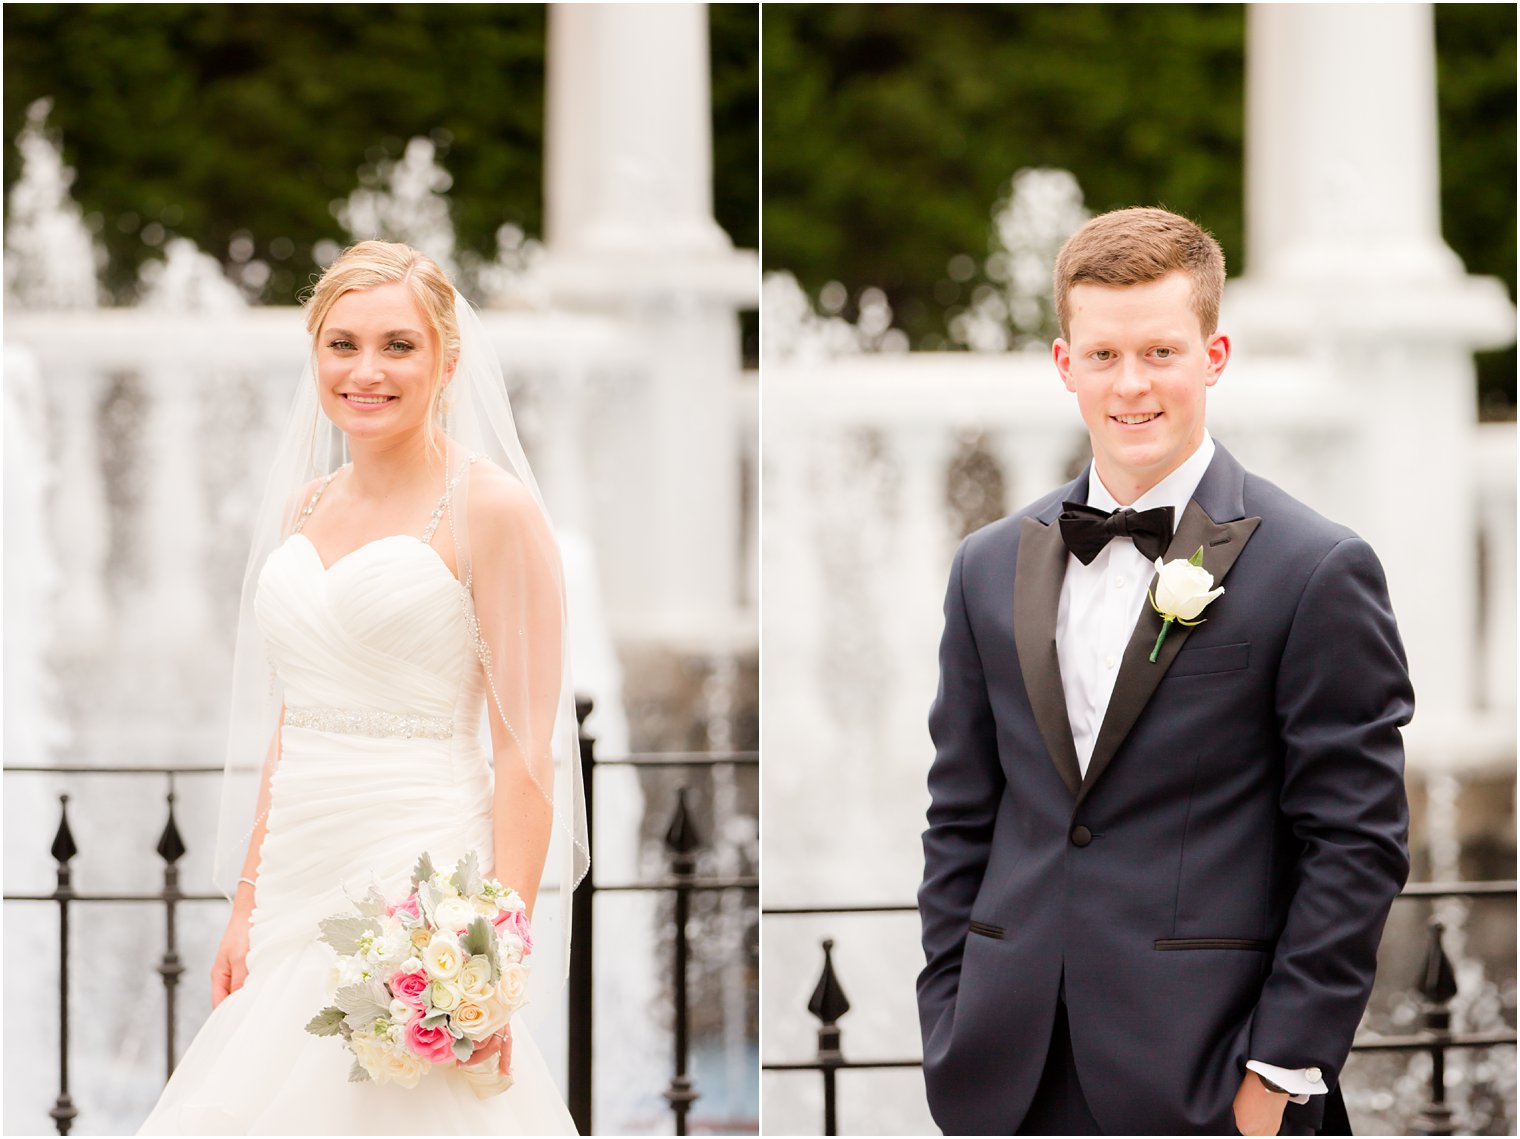 Bride and groom photos | Idalia Photography